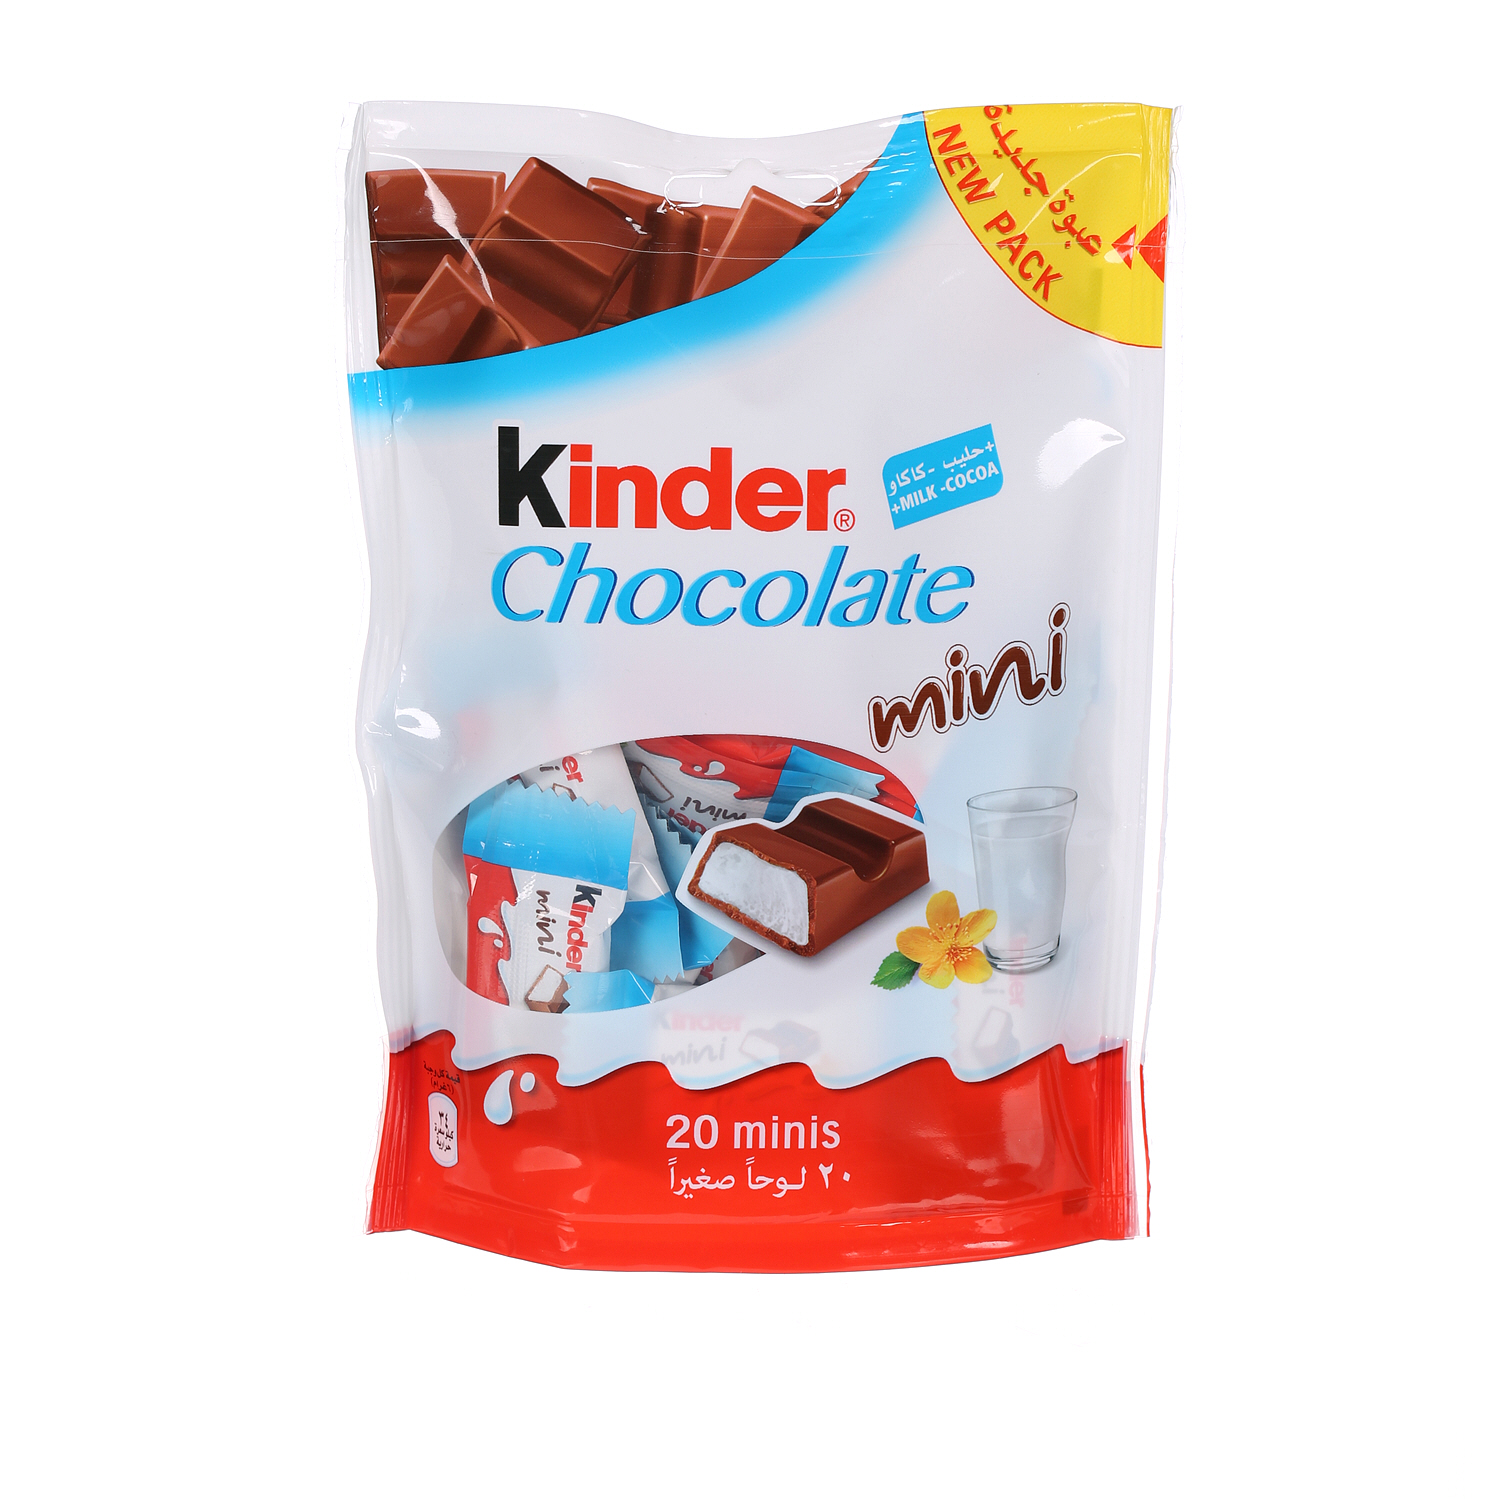 Kinder Chocolate Mini 20 Pieces